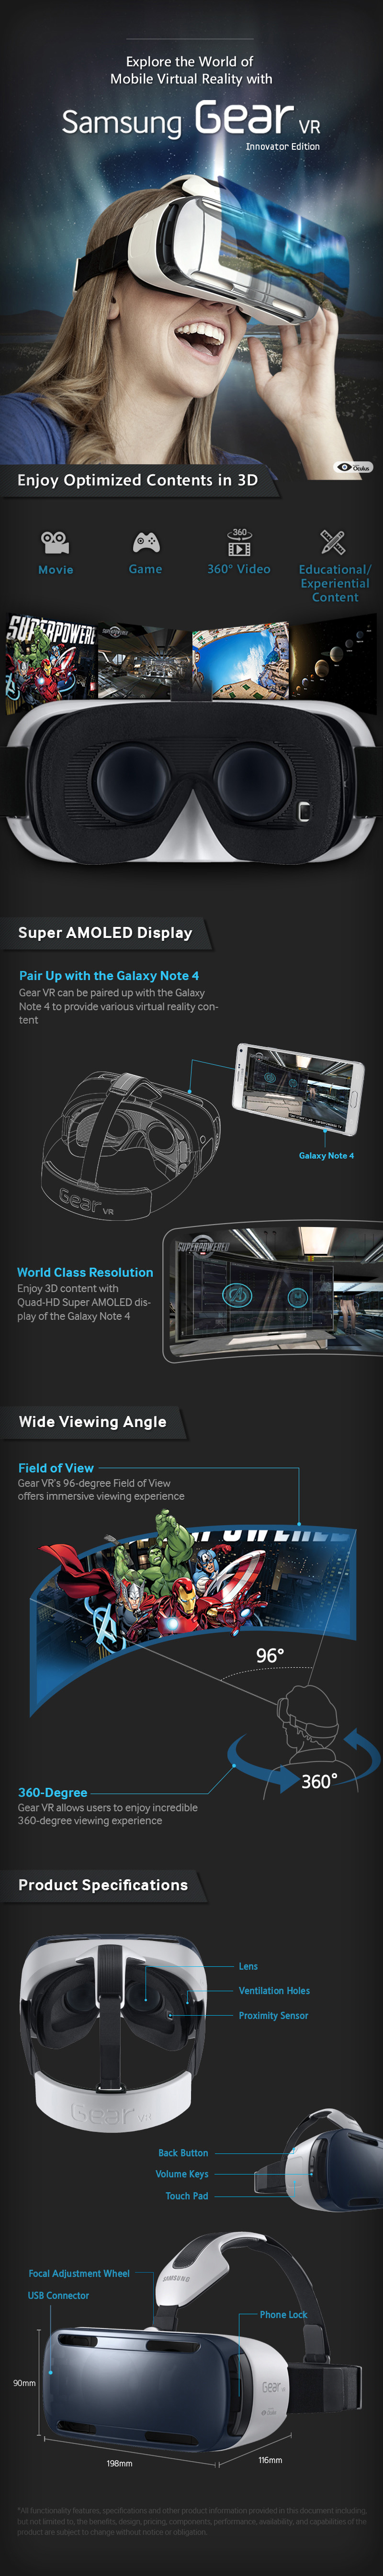 Samsung Gear VR Infographic